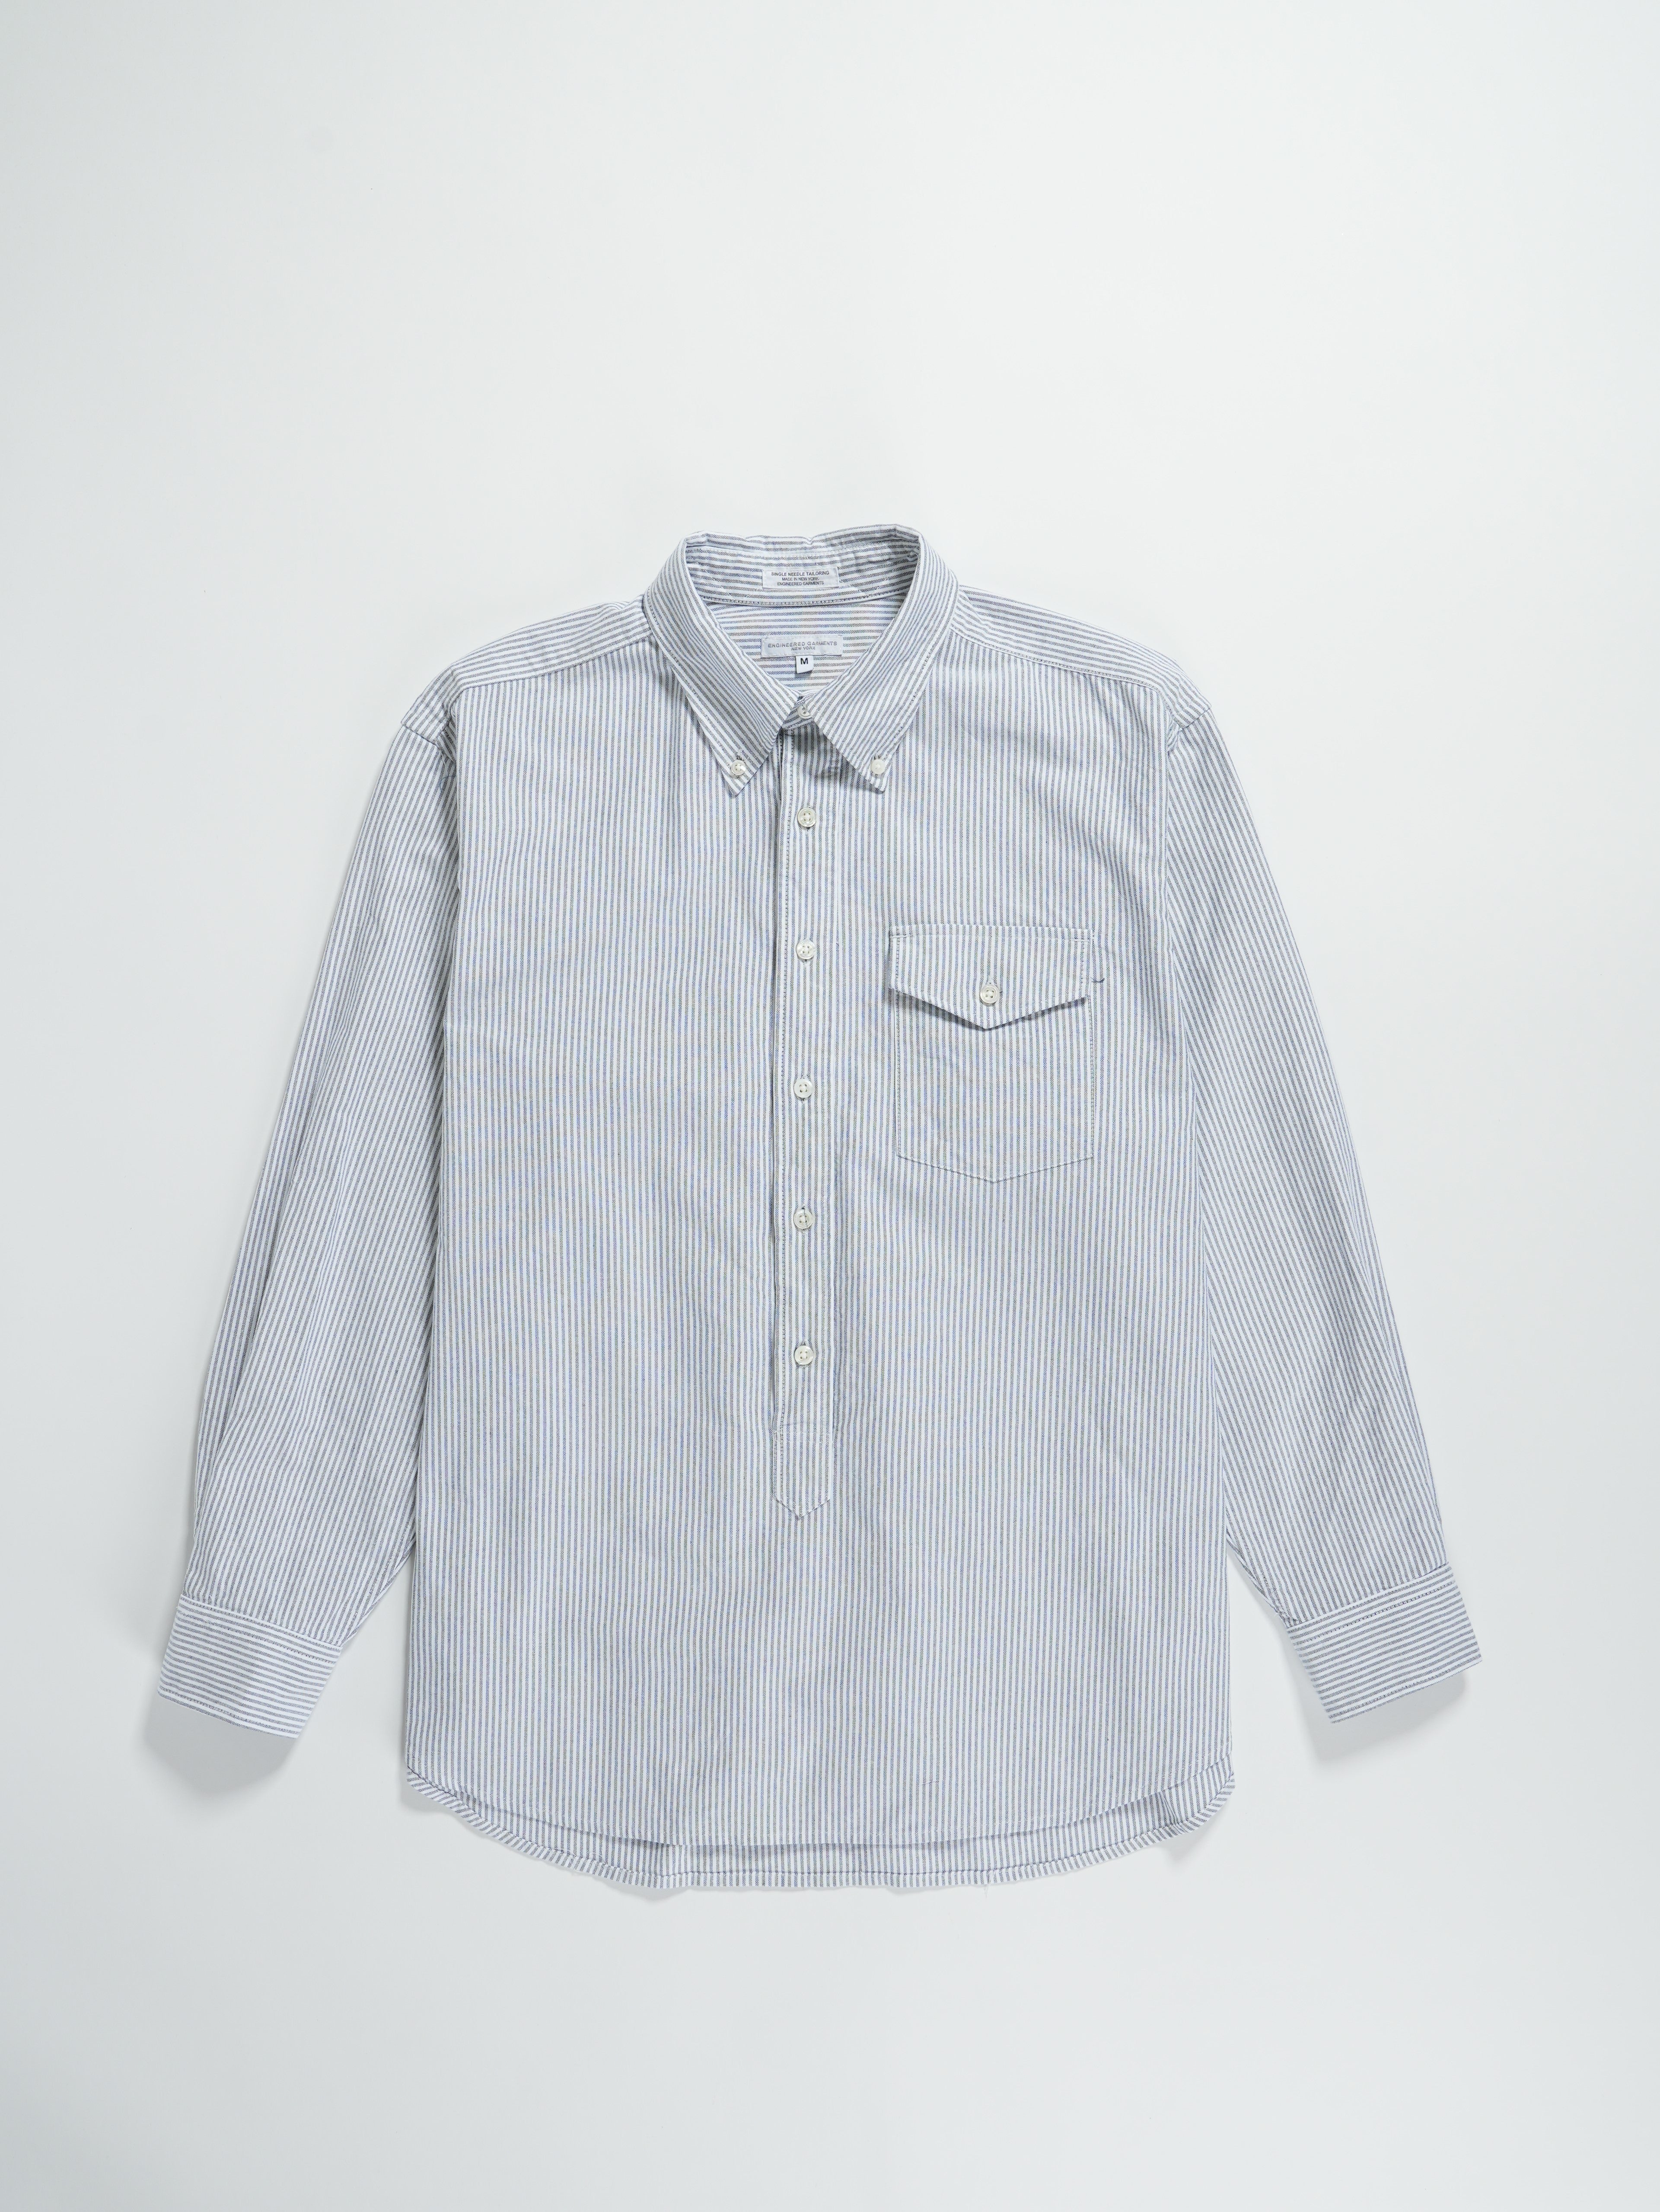 Ivy BD Shirt - Grey Candy Stripe Oxford